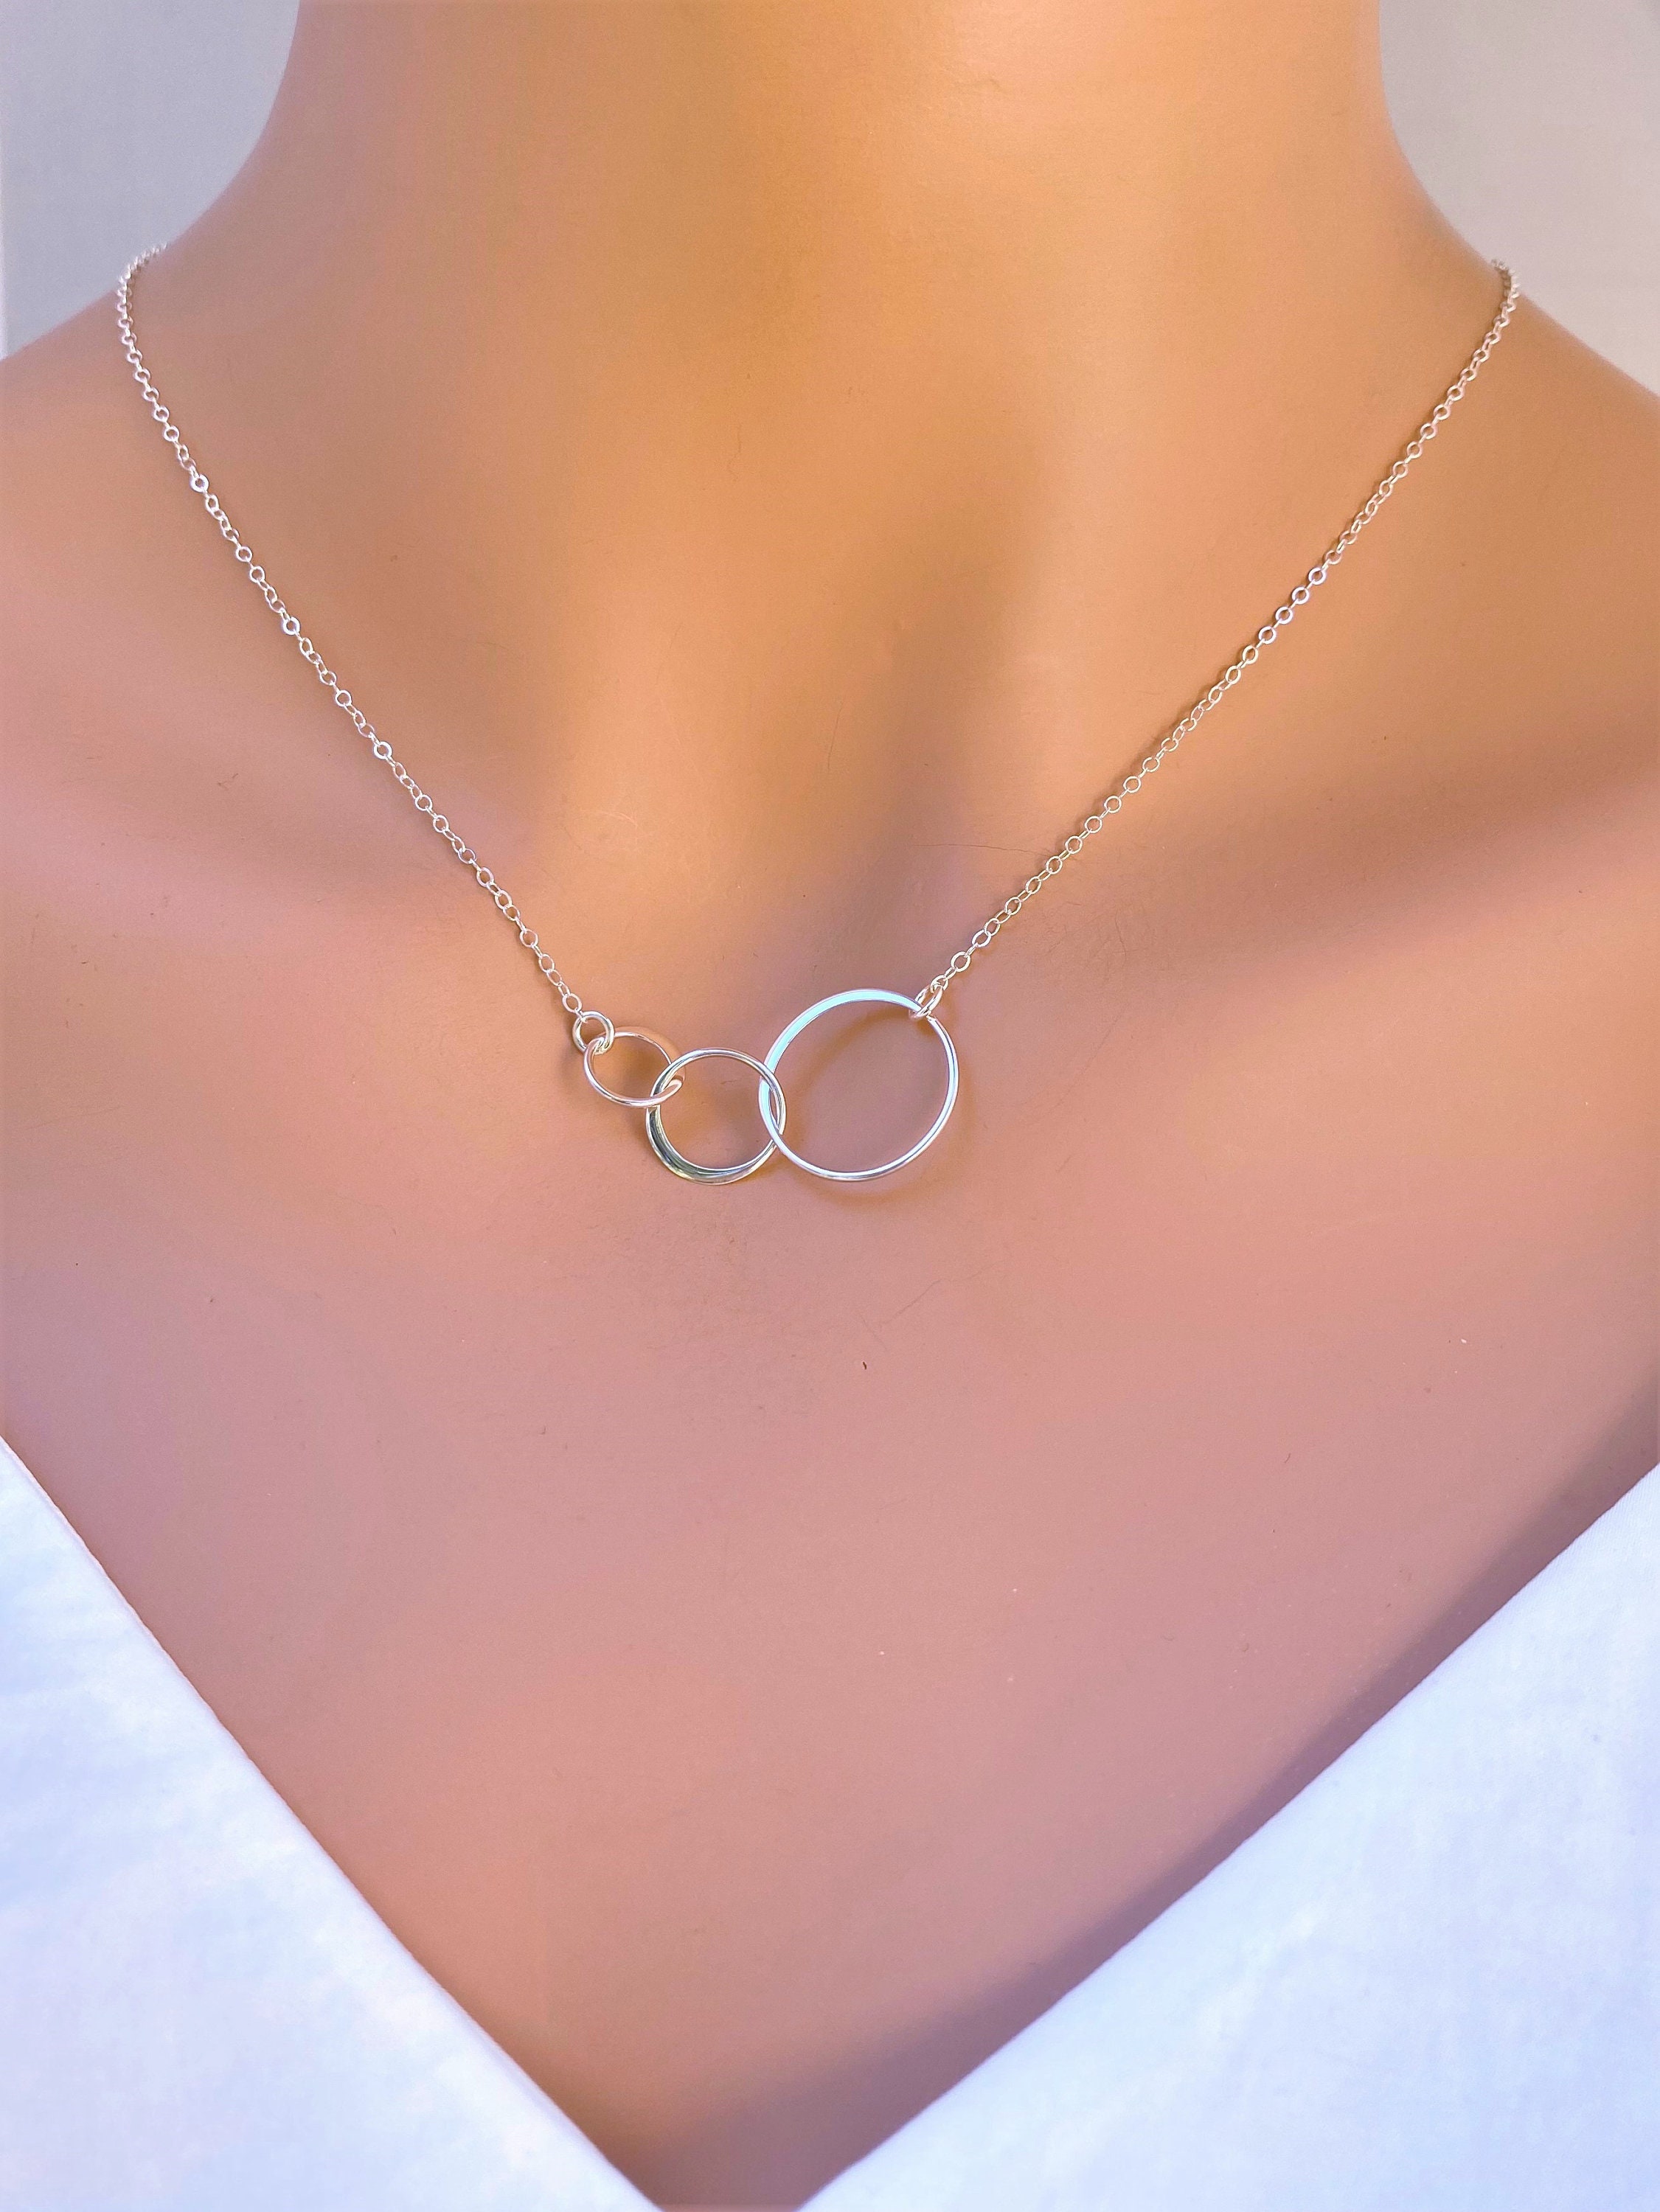 Tiffany & Co. 1837 Interlocking Circles Pendant Necklace | Interlocking  circle necklace, Circle pendant necklace, Circle pendant